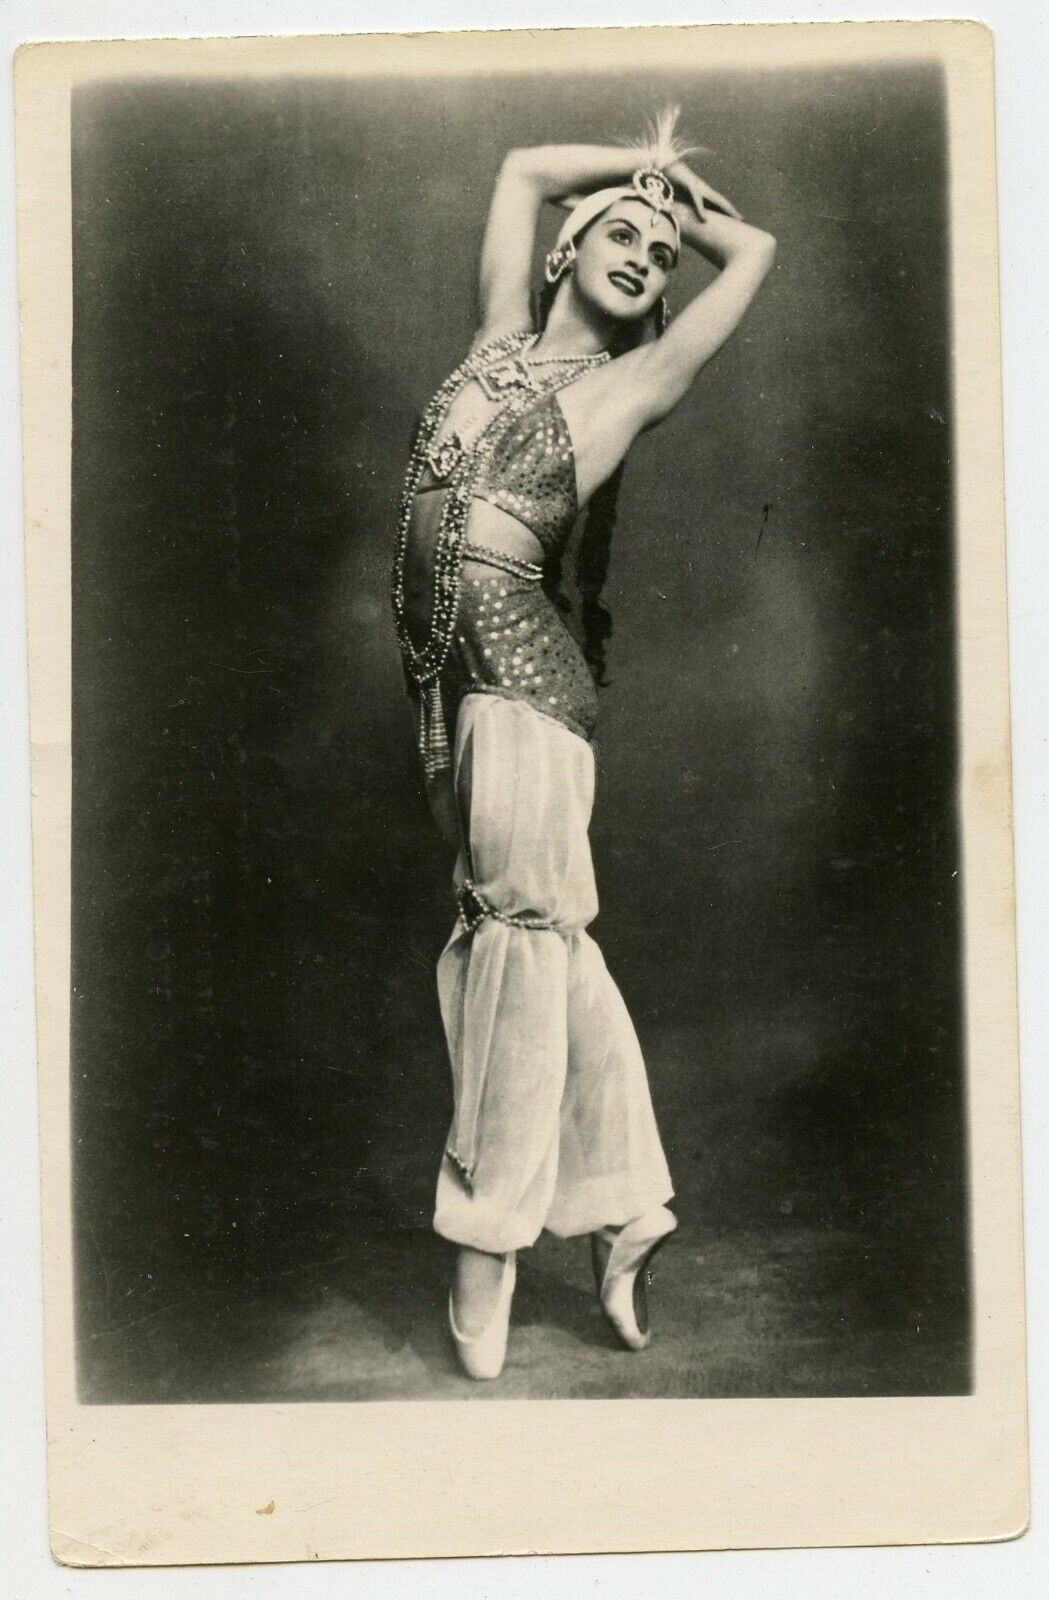 Ballet Dancer Alla Shelest Russian Vintage Photo Postcard by Tambov Co op 1955